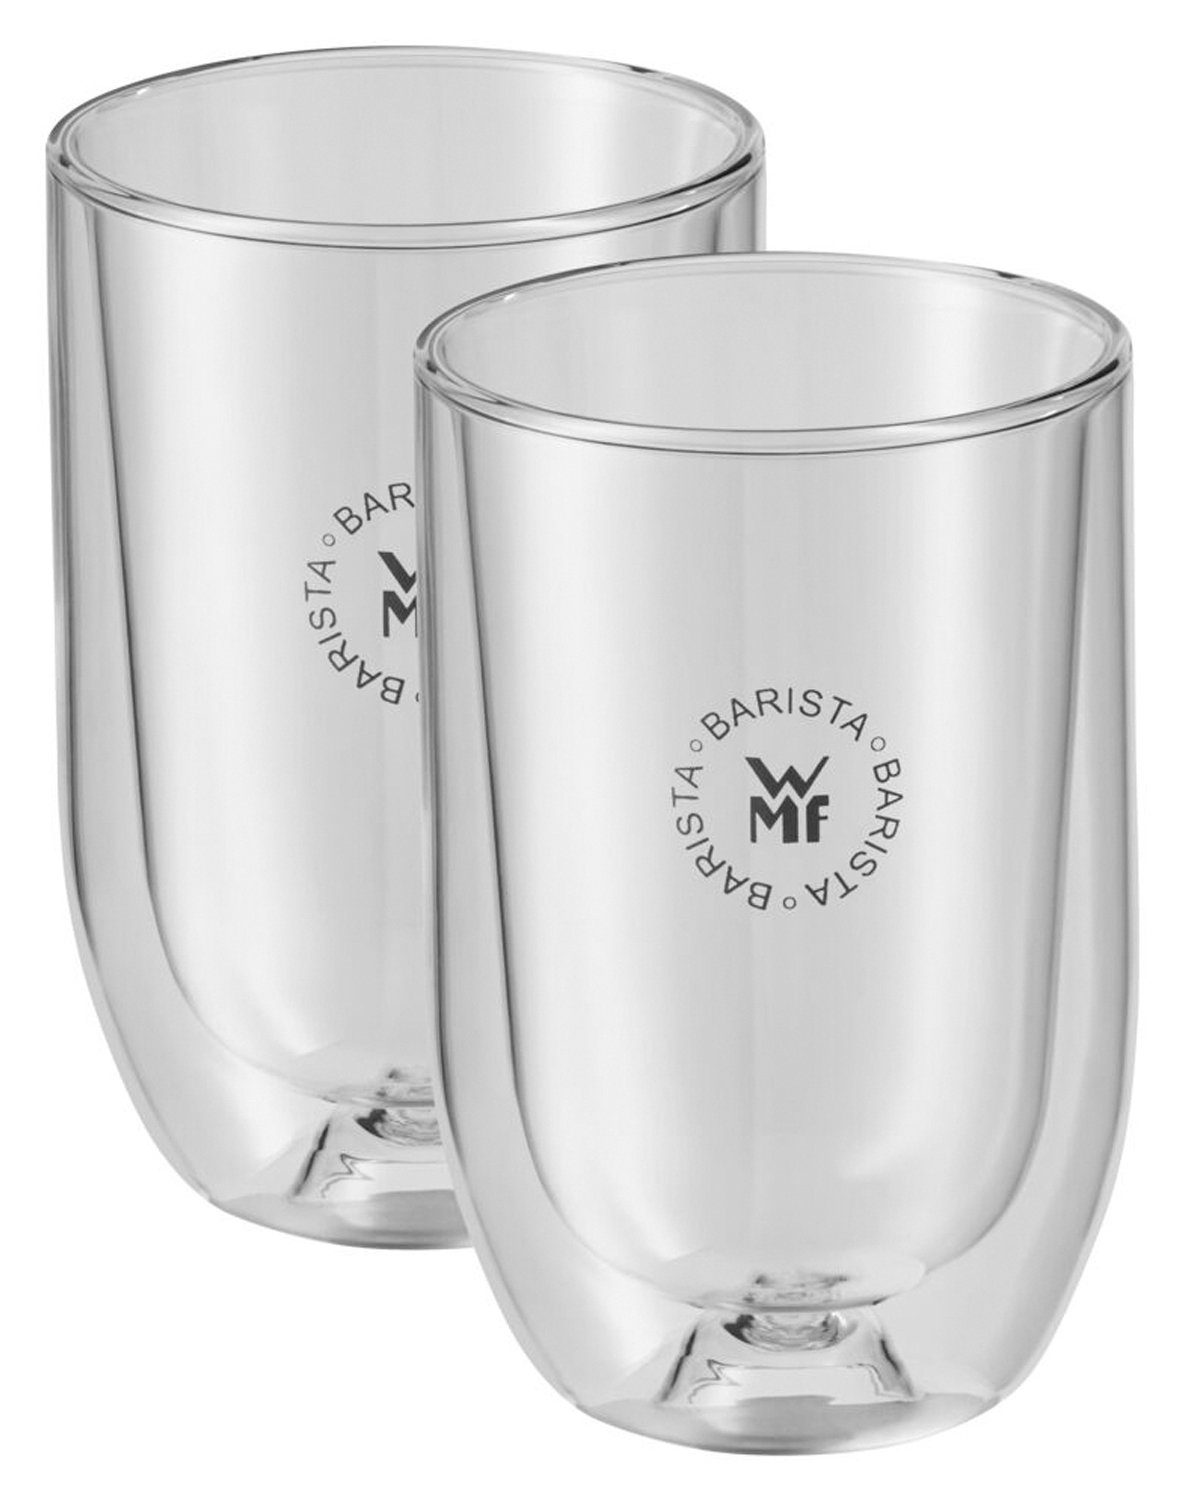 WMF Latte-Macchiato-Glas 2er Set BARISTA, Füllmenge 270 ml, mit Henkel, Borosilikatglas, doppelwandiger Glaskörper